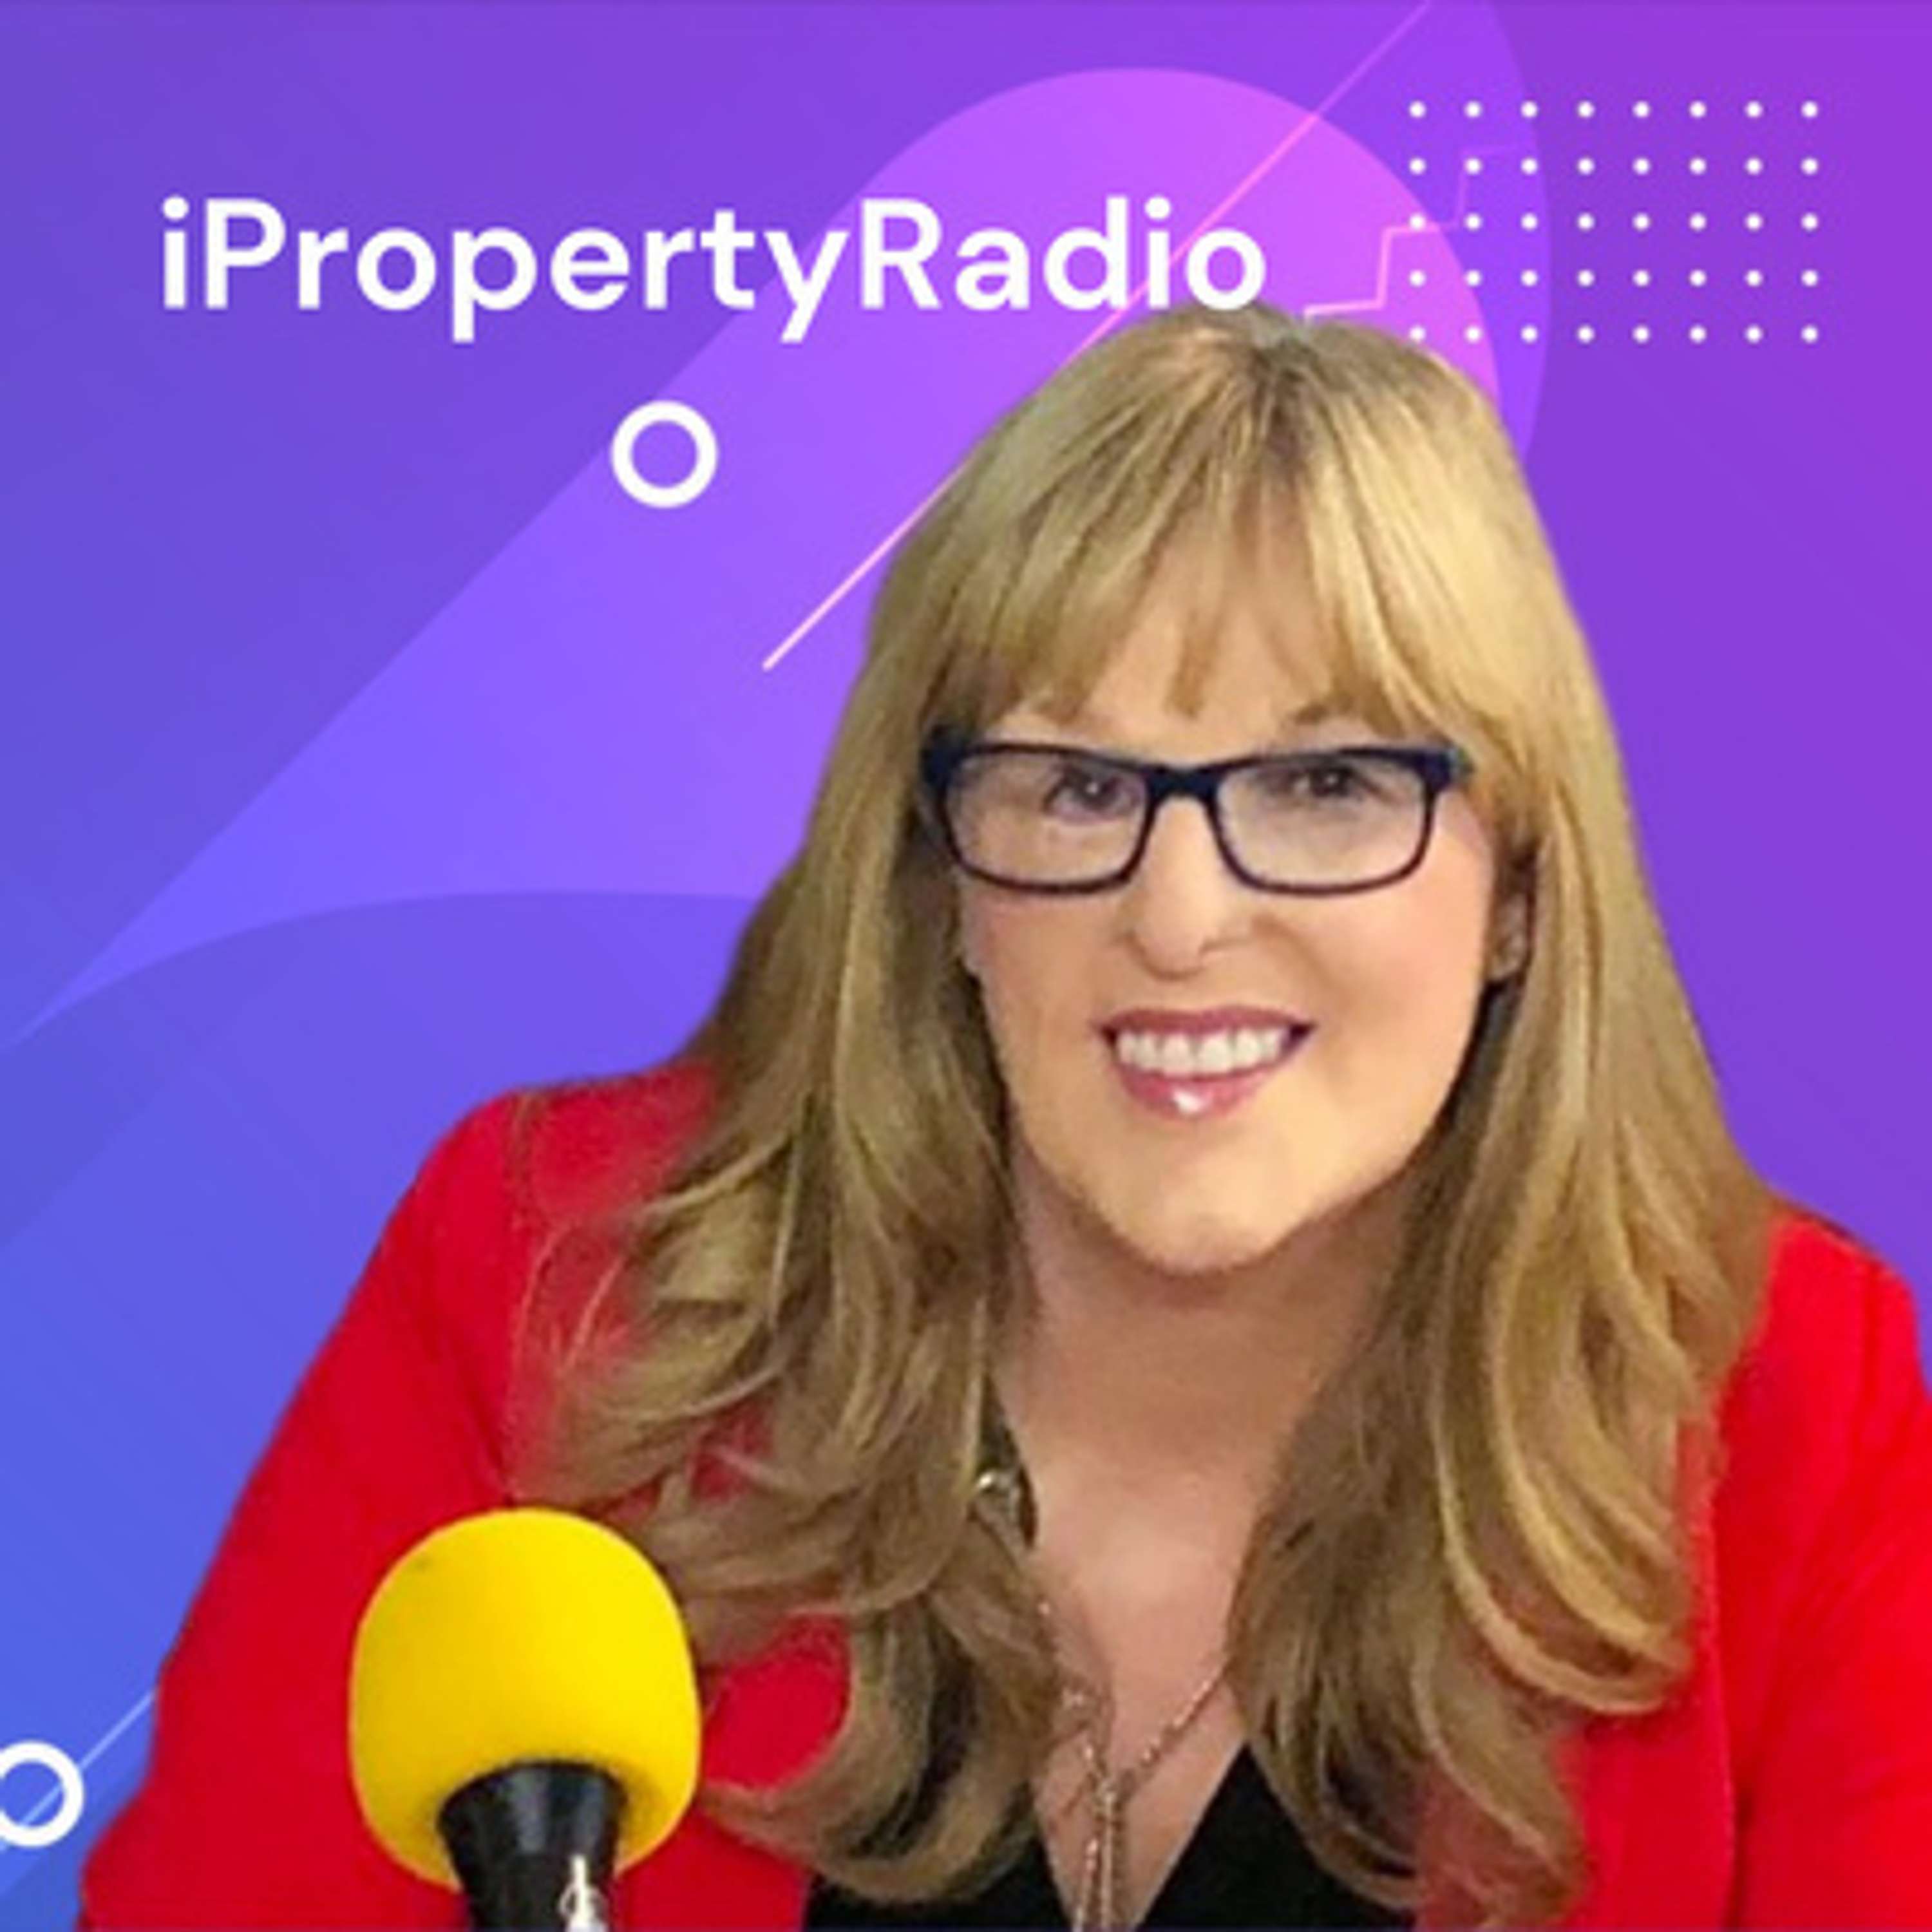 Ep.17 iPropertyRadio: Property Matters - May 14, 2019